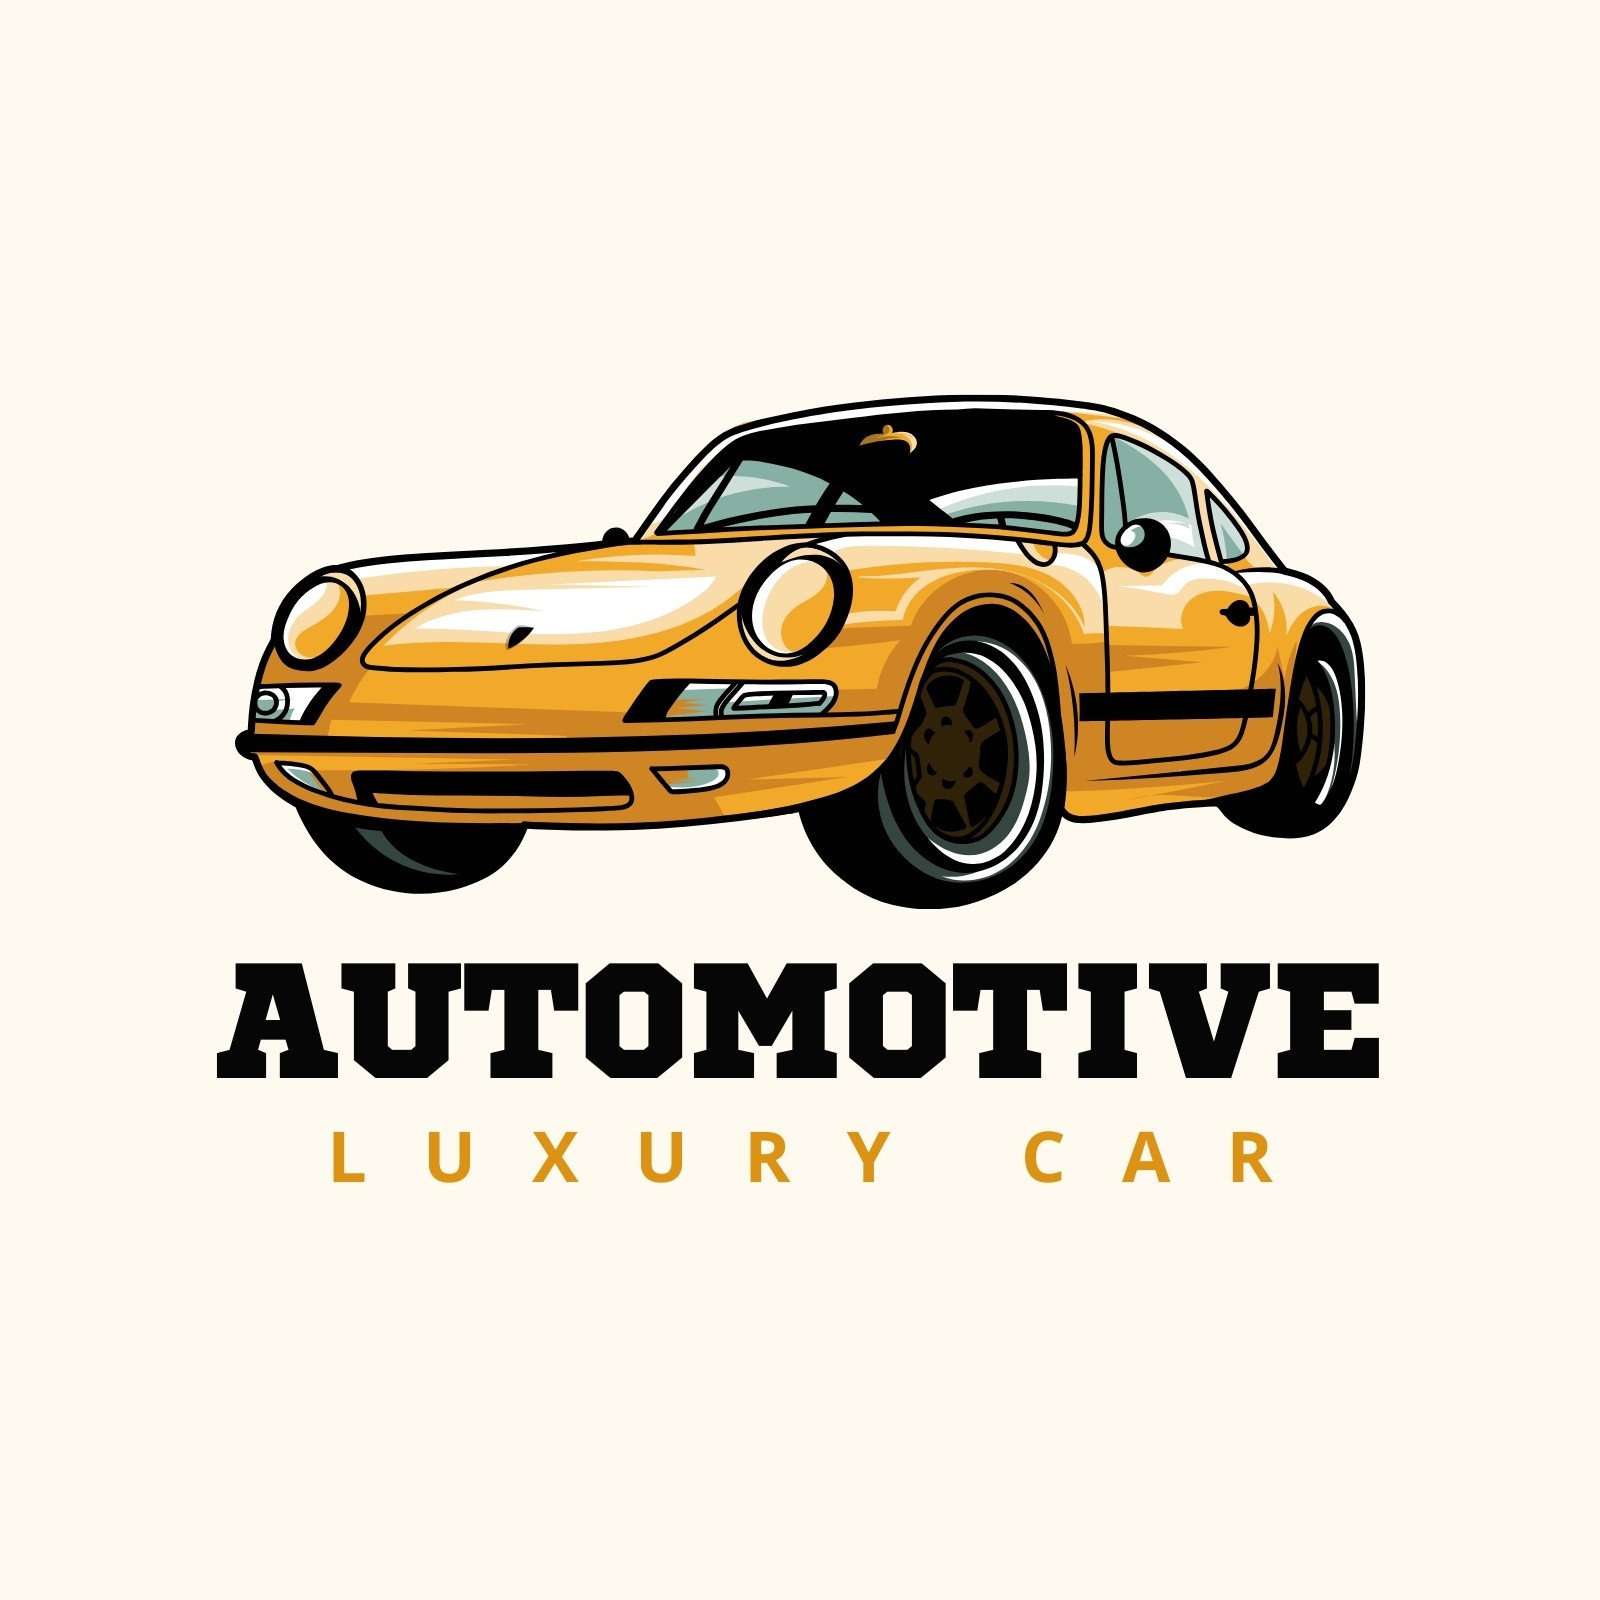 Yellow and Black Illustrative Automotive Luxury Car Logo